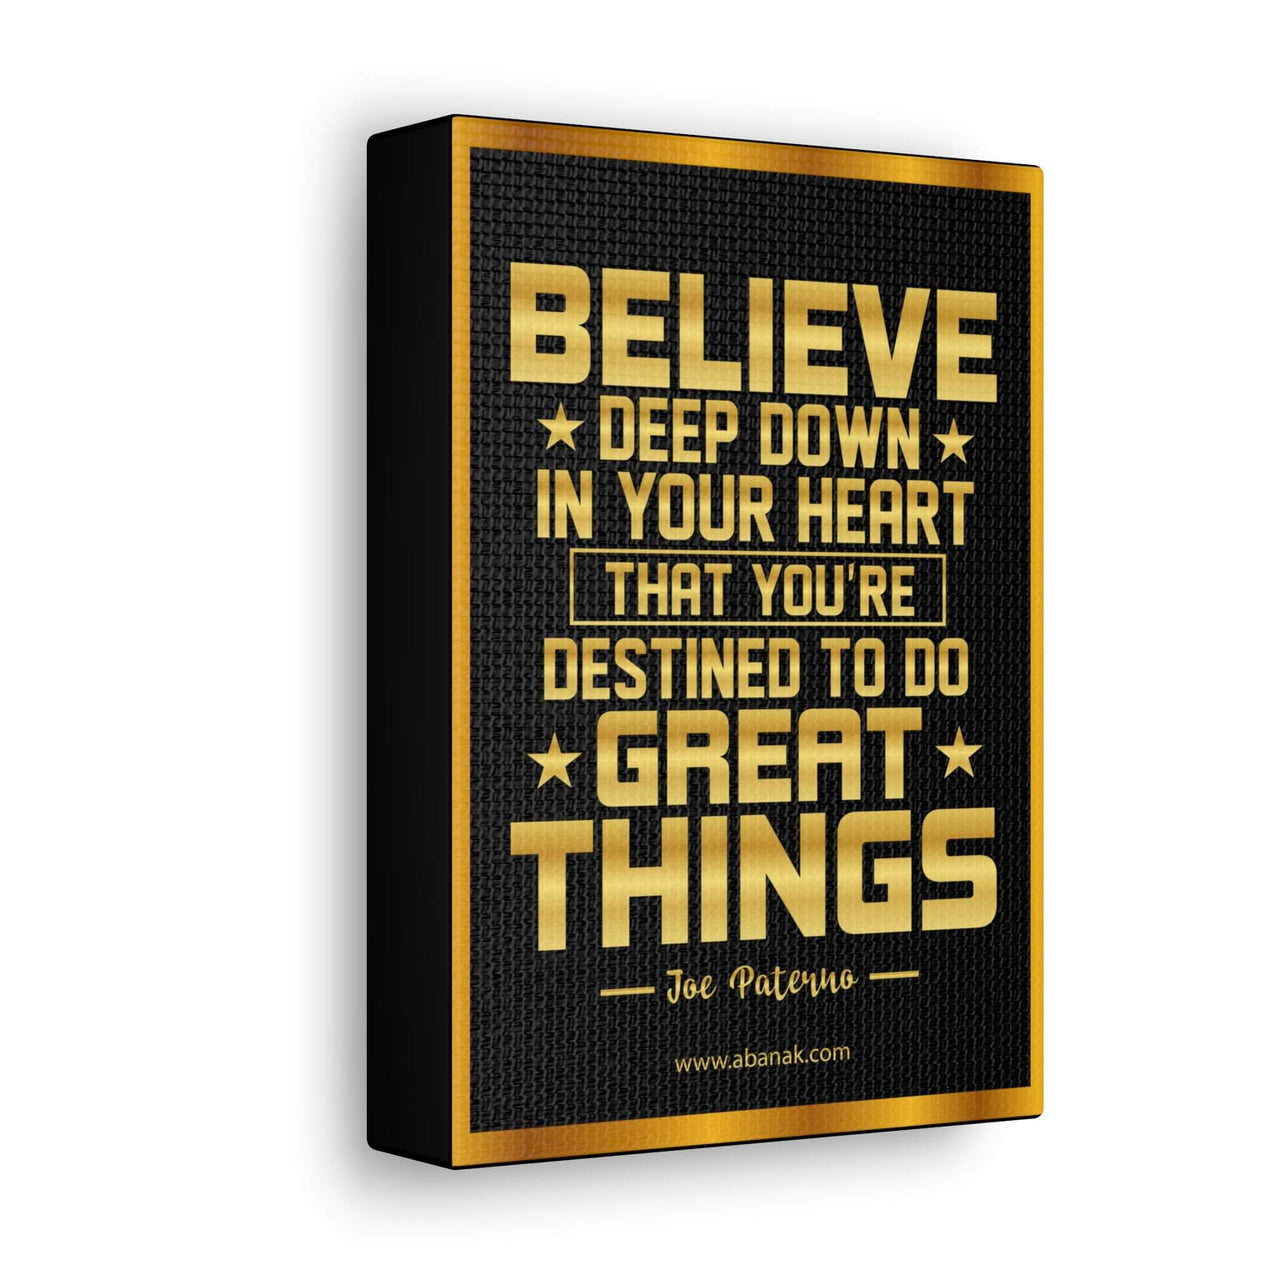 Believe Deep Down - Joe Paterno Quote Motivational Canvas Wall Art | Abanak